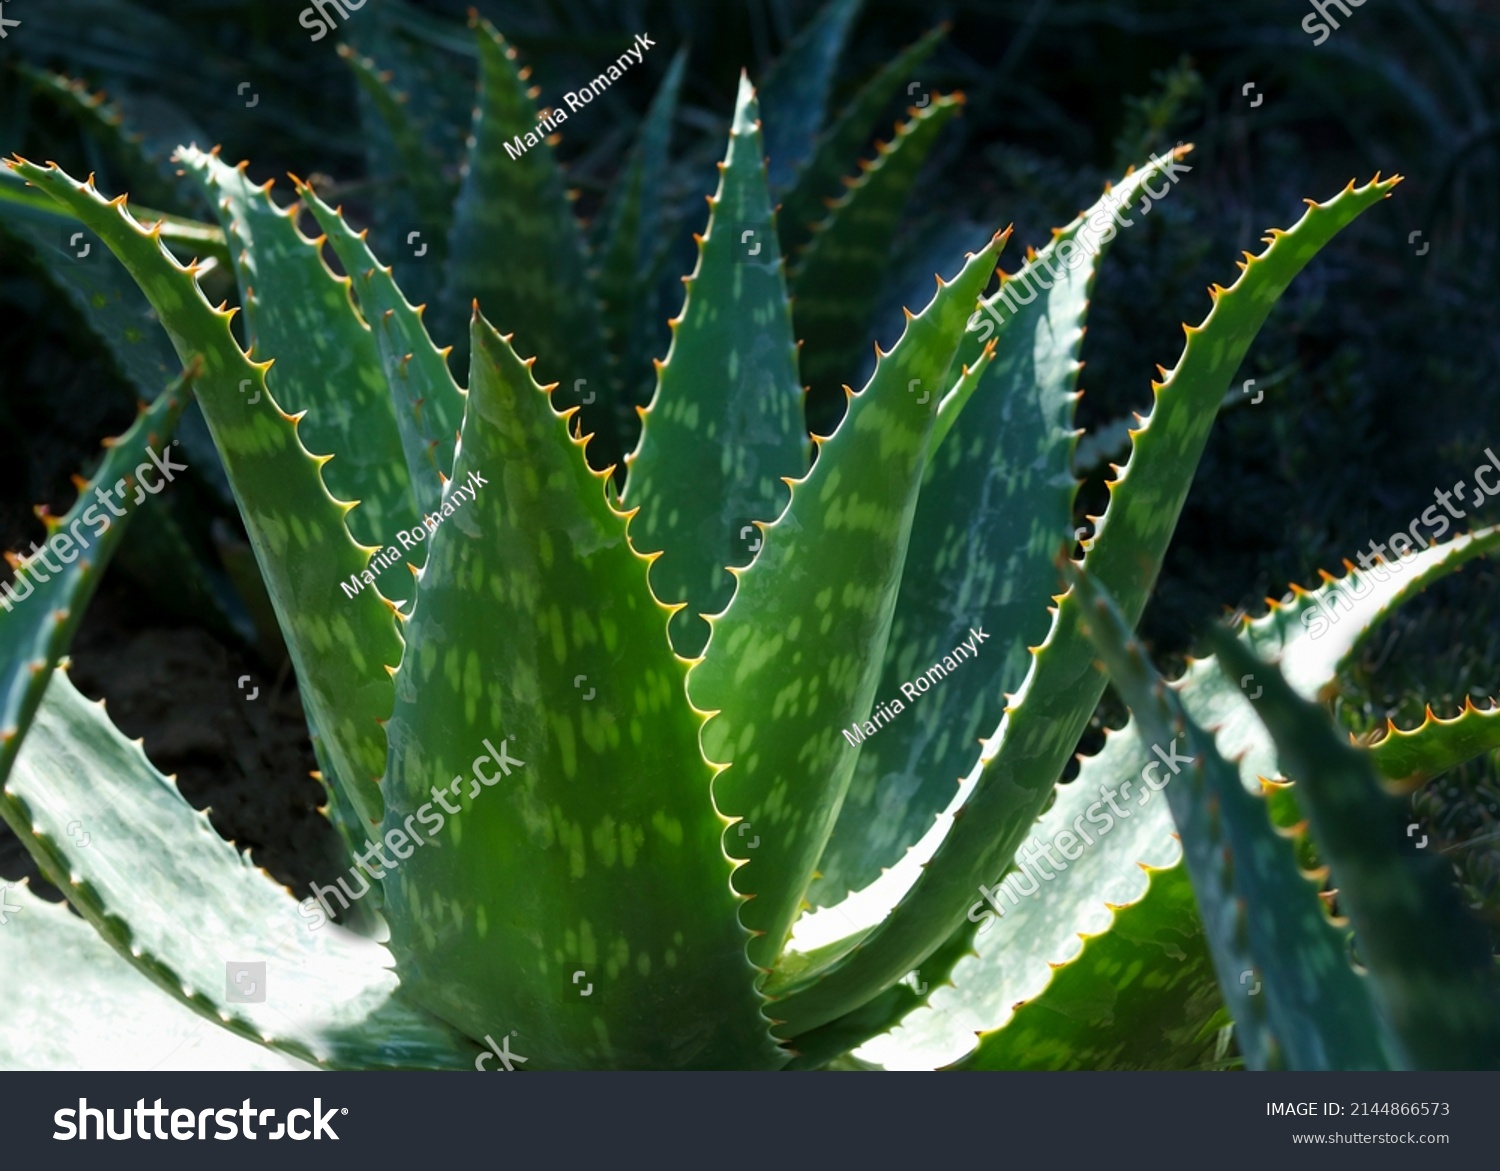 Tropical green plants .Fresh Aloe Vera in dark green background. Aloe Vera for cosmetics ingredient . Spring background. Close up of Green Aloe Vera plant growing in the garden. #2144866573